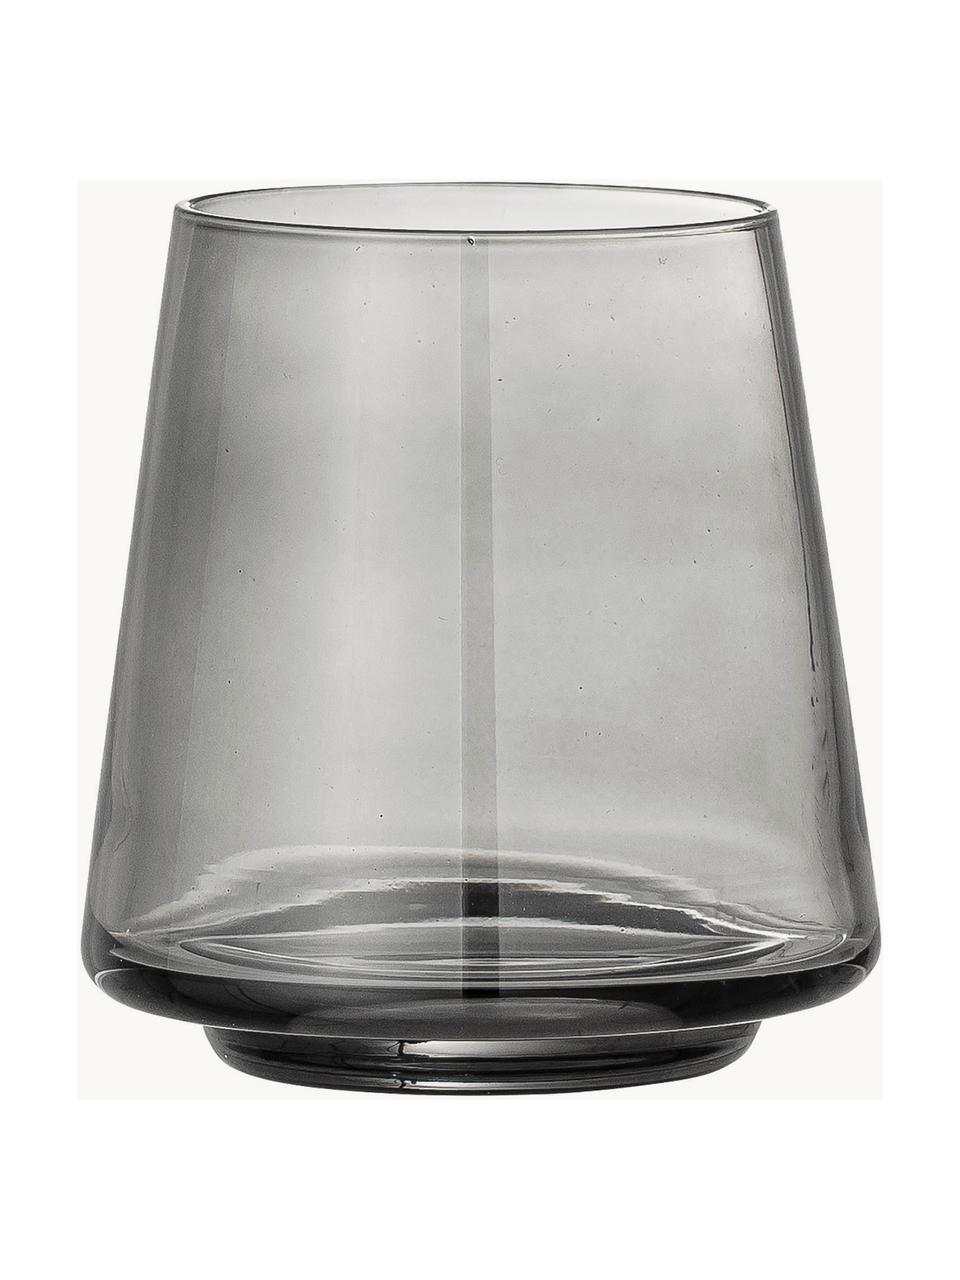 Wassergläser Yvette, 4 Stück, Glas, Grau, transparent, Ø 10 x H 10 cm, 330 ml